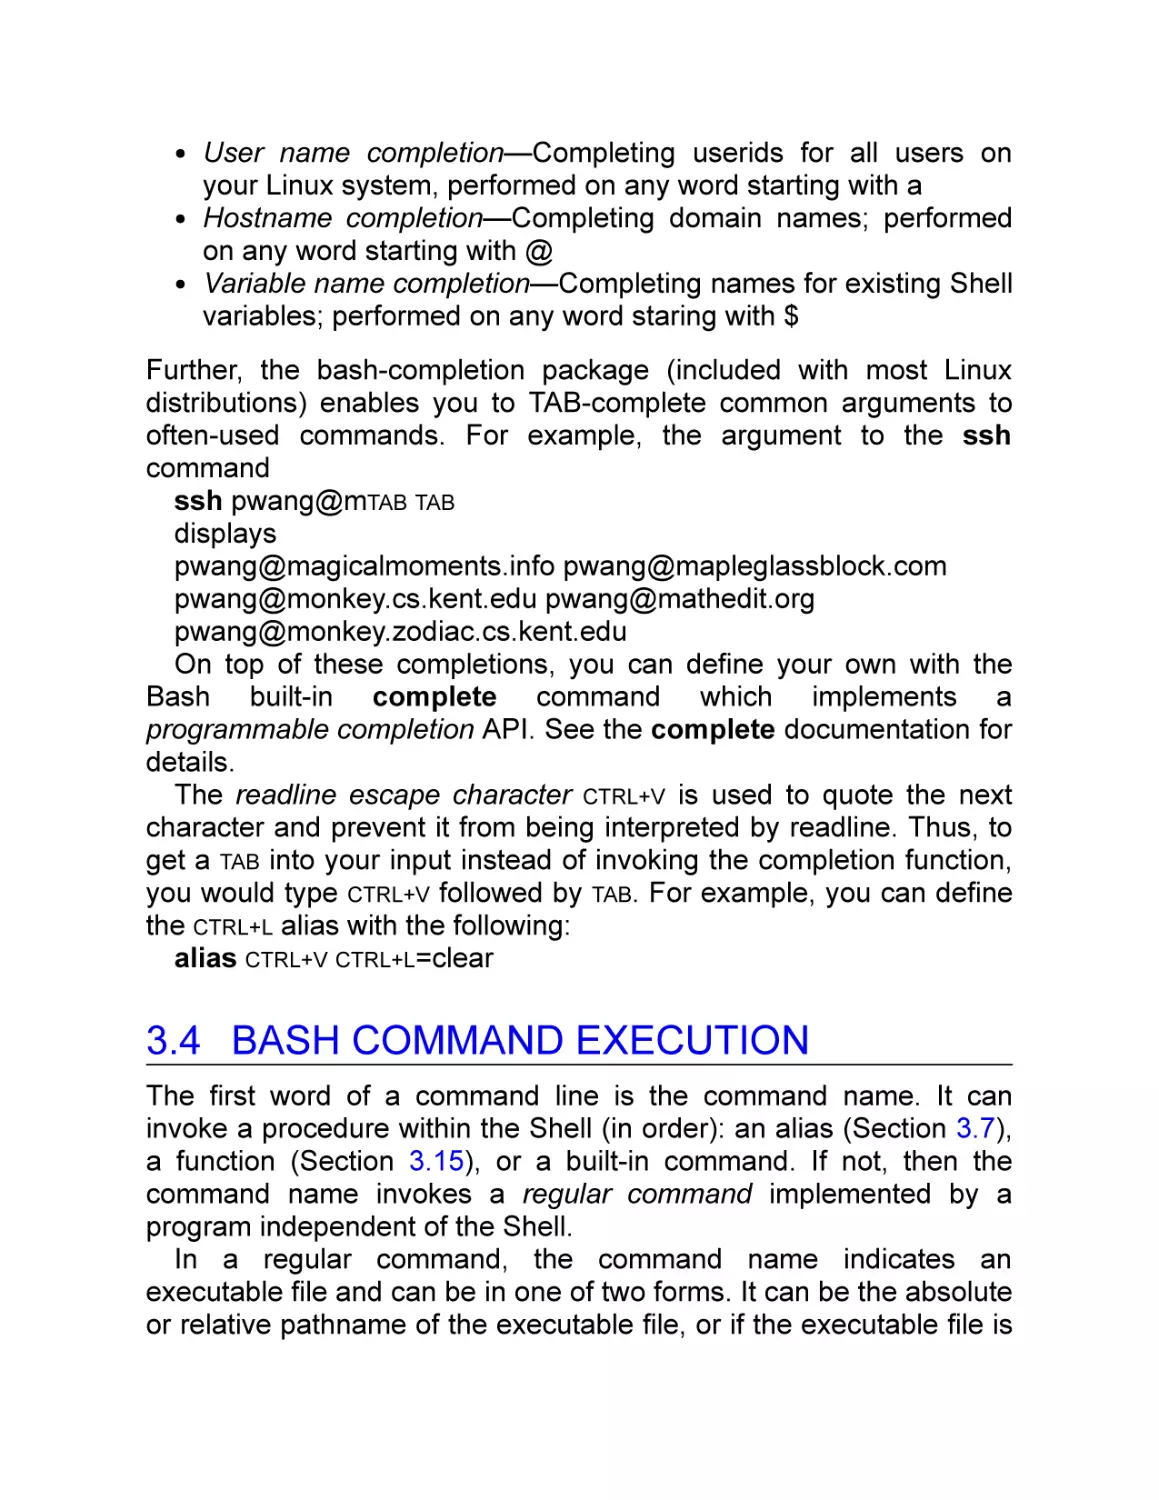 3.4 Bash Command Execution